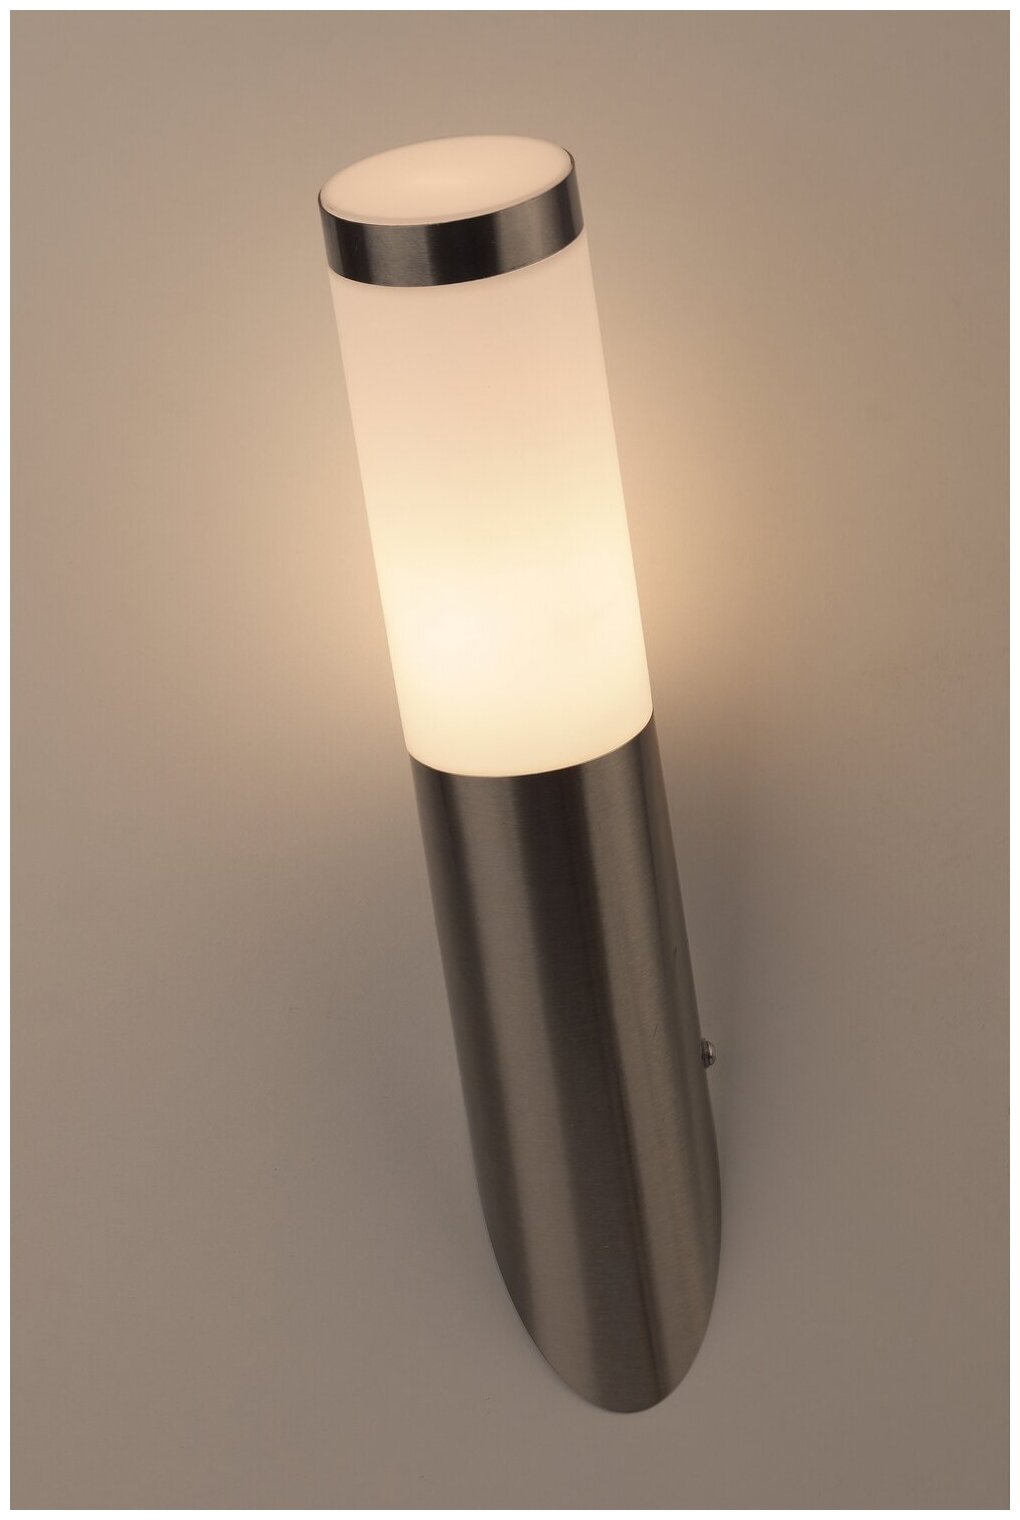 Светильник Эра WL18 декоративная подсветка E27 MAX60W IP54 хром, белый